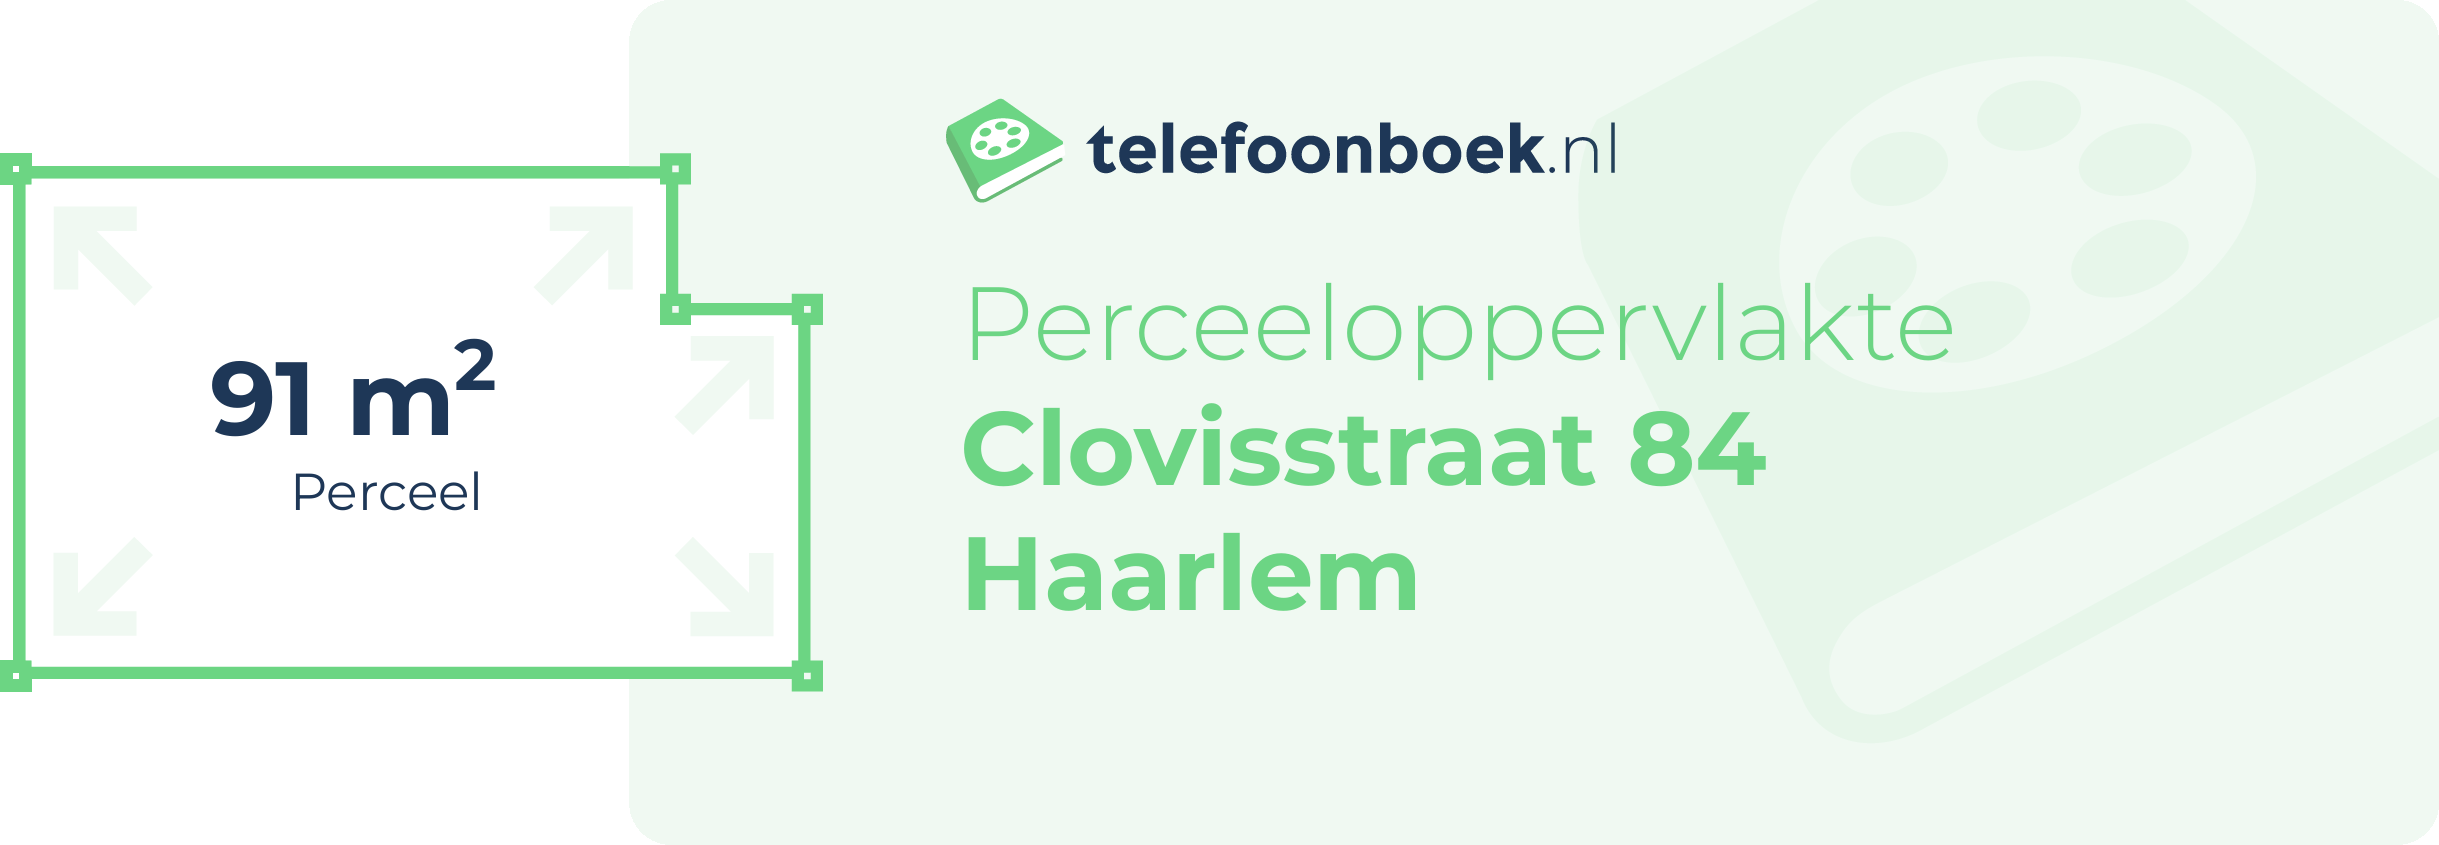 Perceeloppervlakte Clovisstraat 84 Haarlem